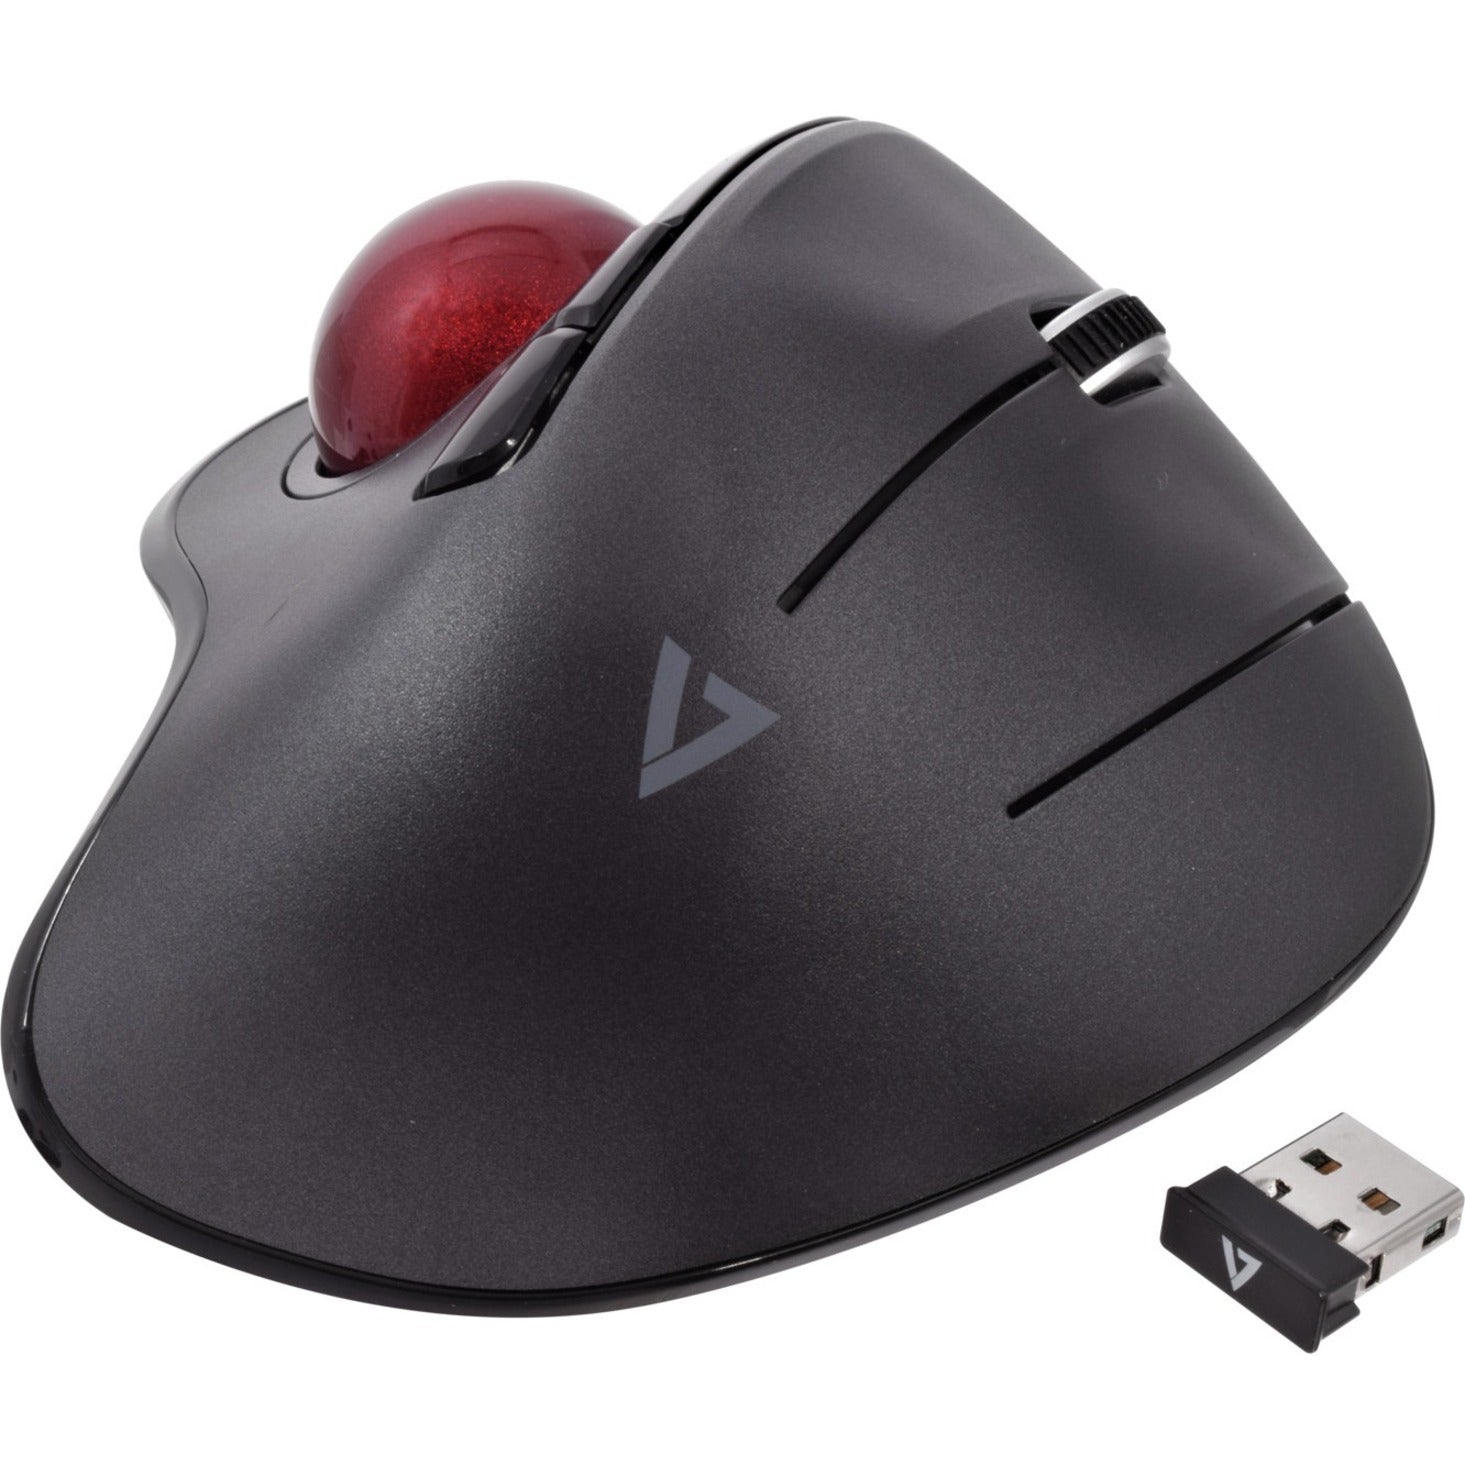 V7 Vertical Ergonomic Trackball Mouse, Wireless 6 Button Auto-speed Dpi, Ergo (MW650) Main image